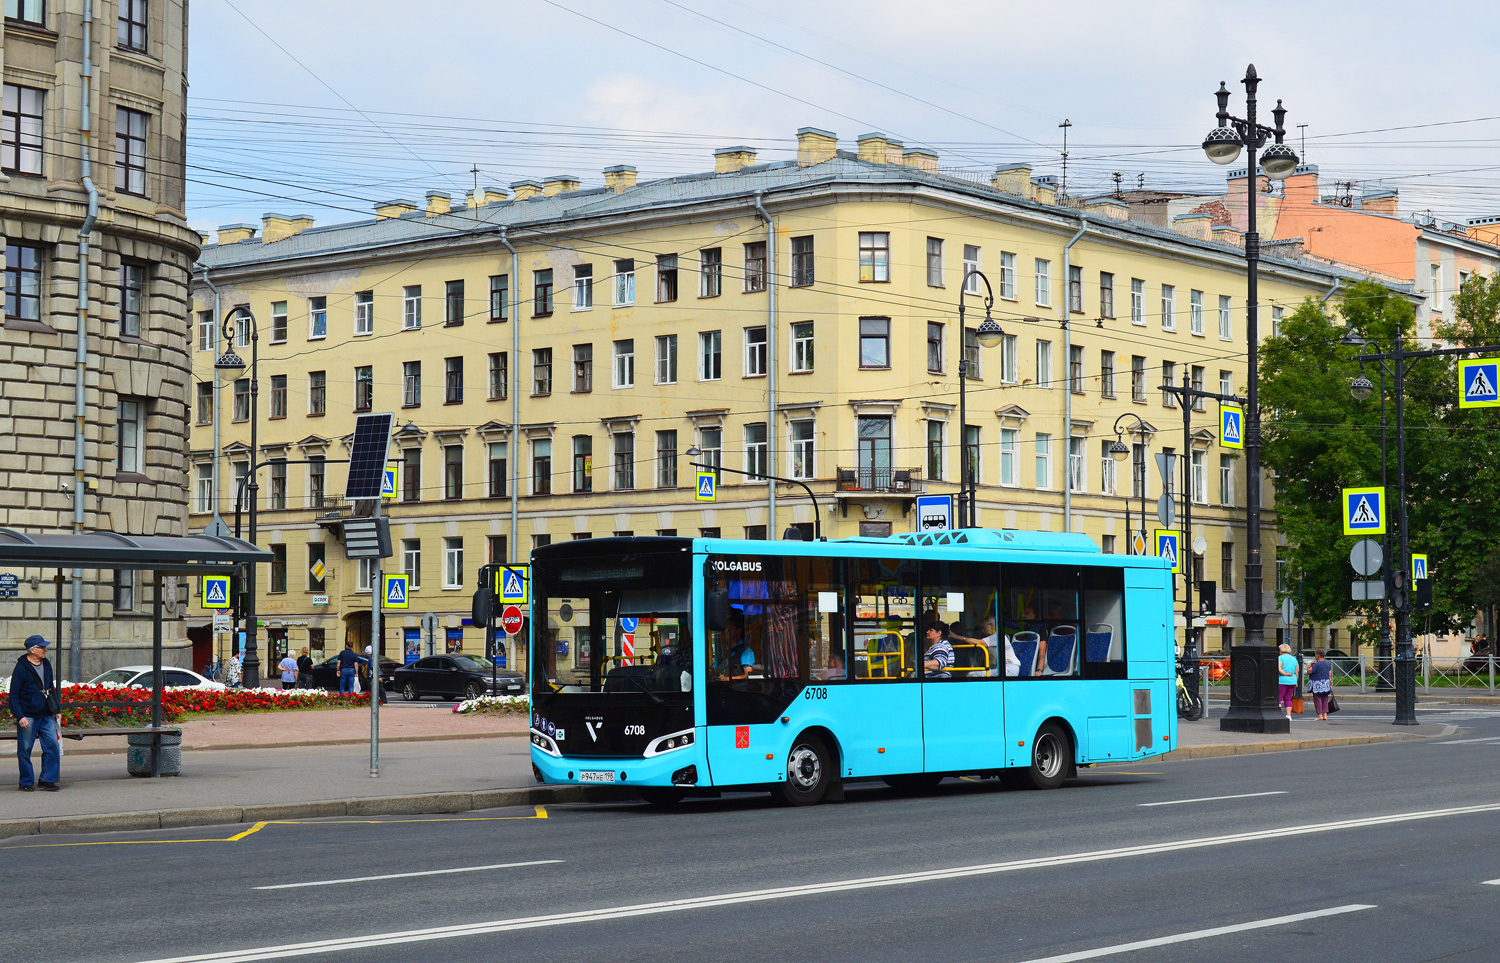 Saint Petersburg, Volgabus-4298.G4 (LNG) # 6708